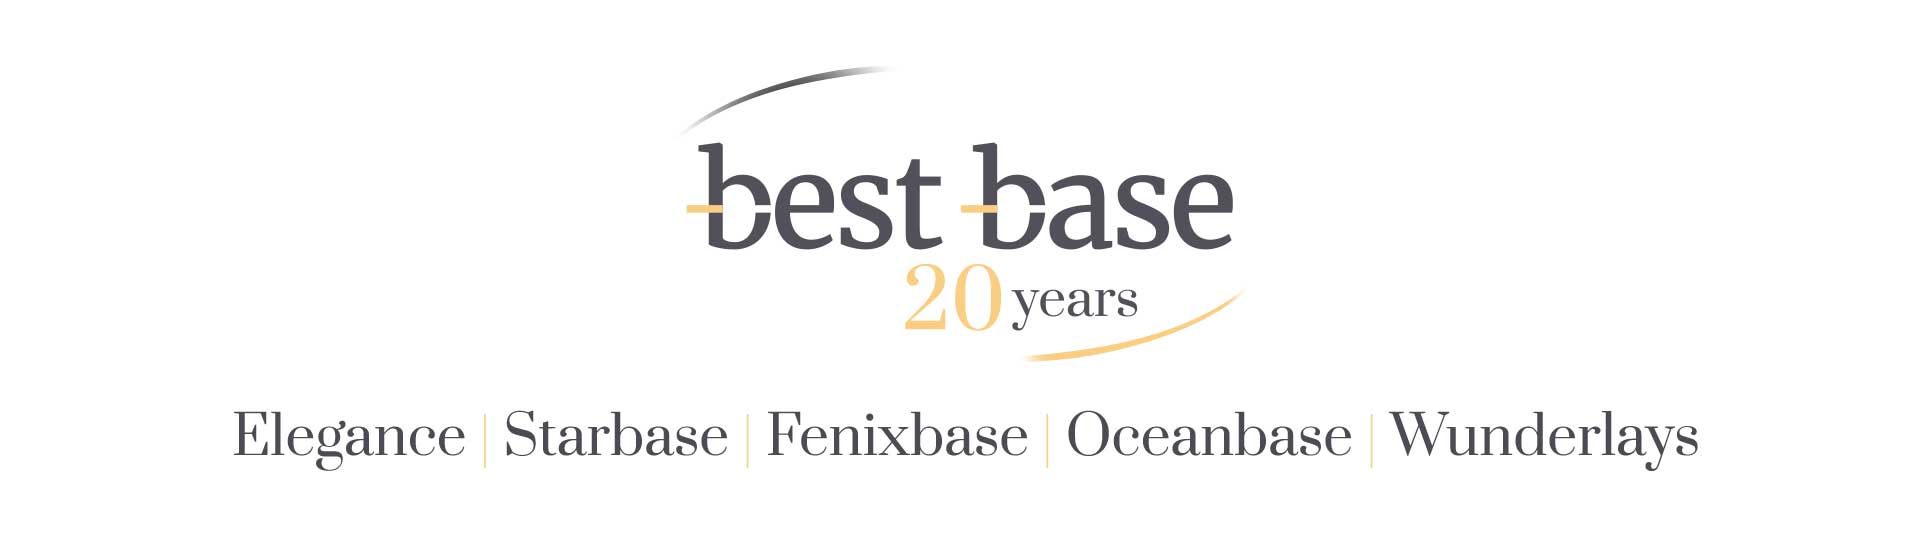 Best Base 20 years